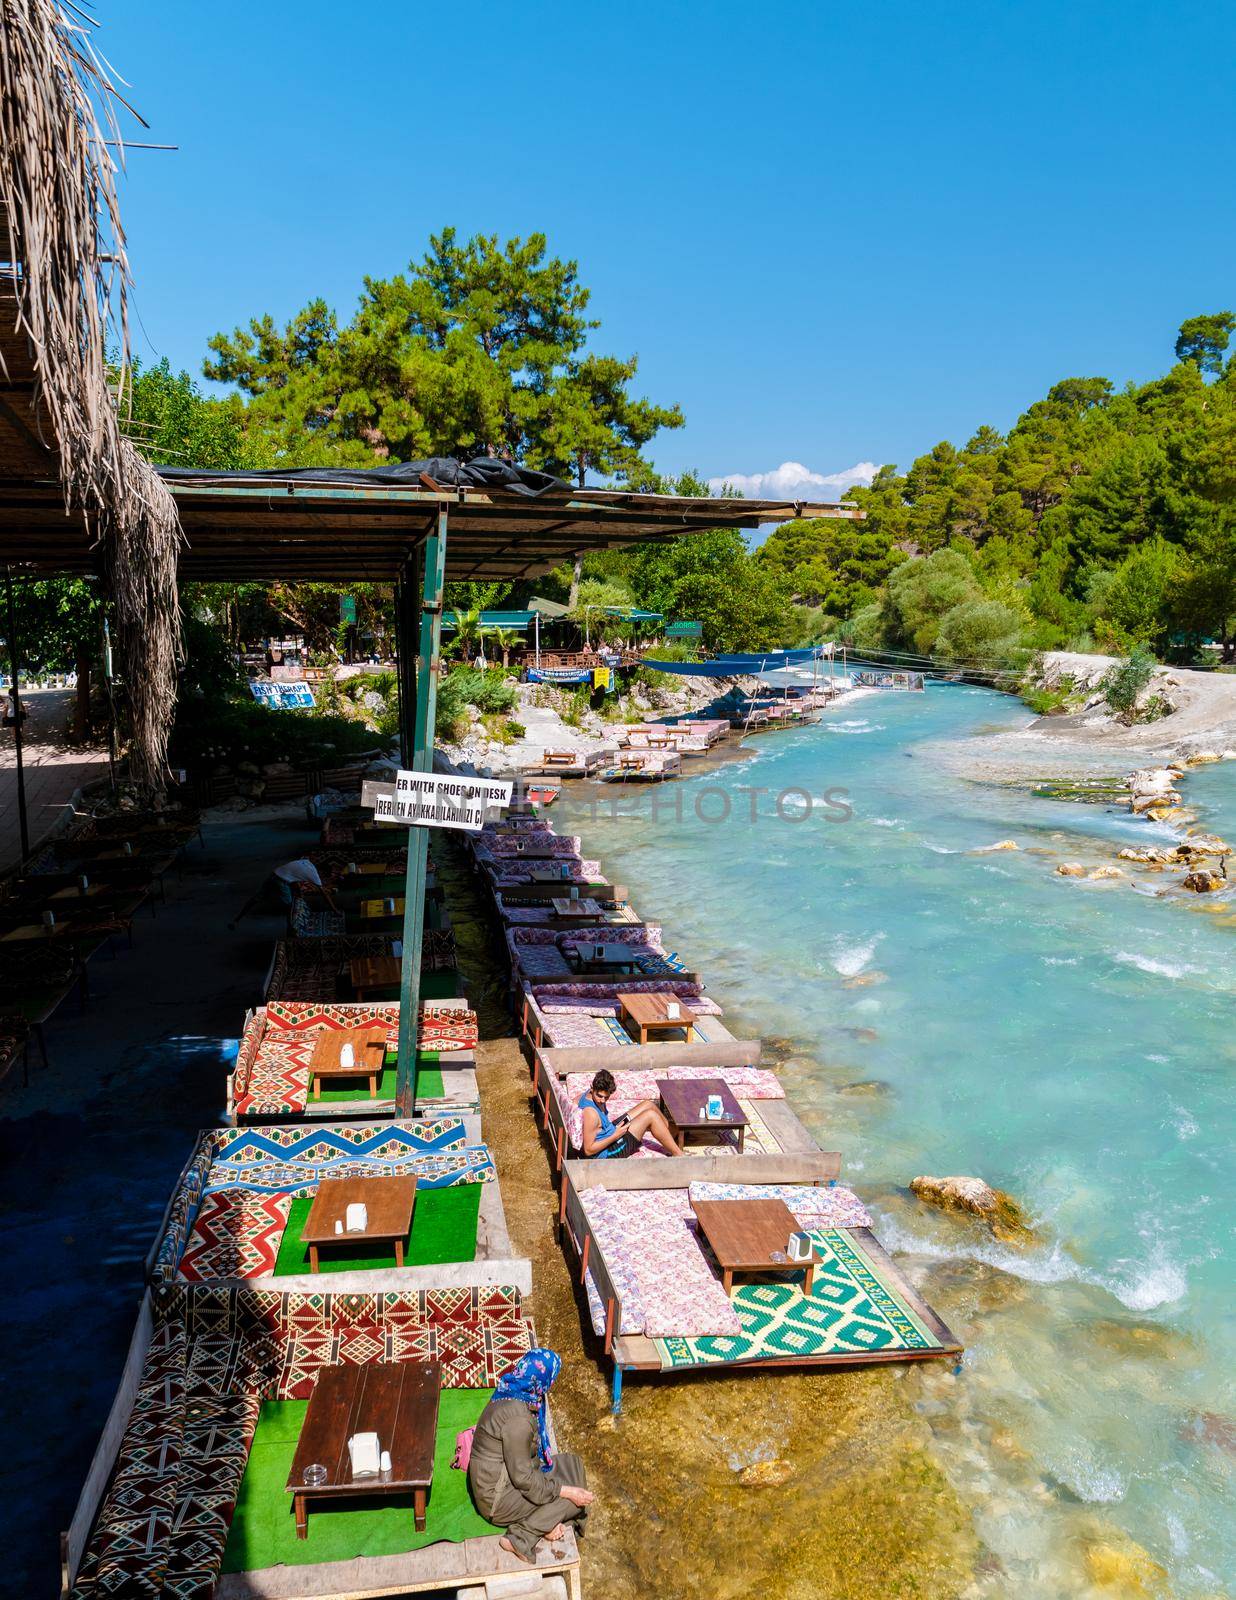 Saklikent Turkey Colorful Restaurant in the river near famous Saklikent canyon in Turkey by fokkebok